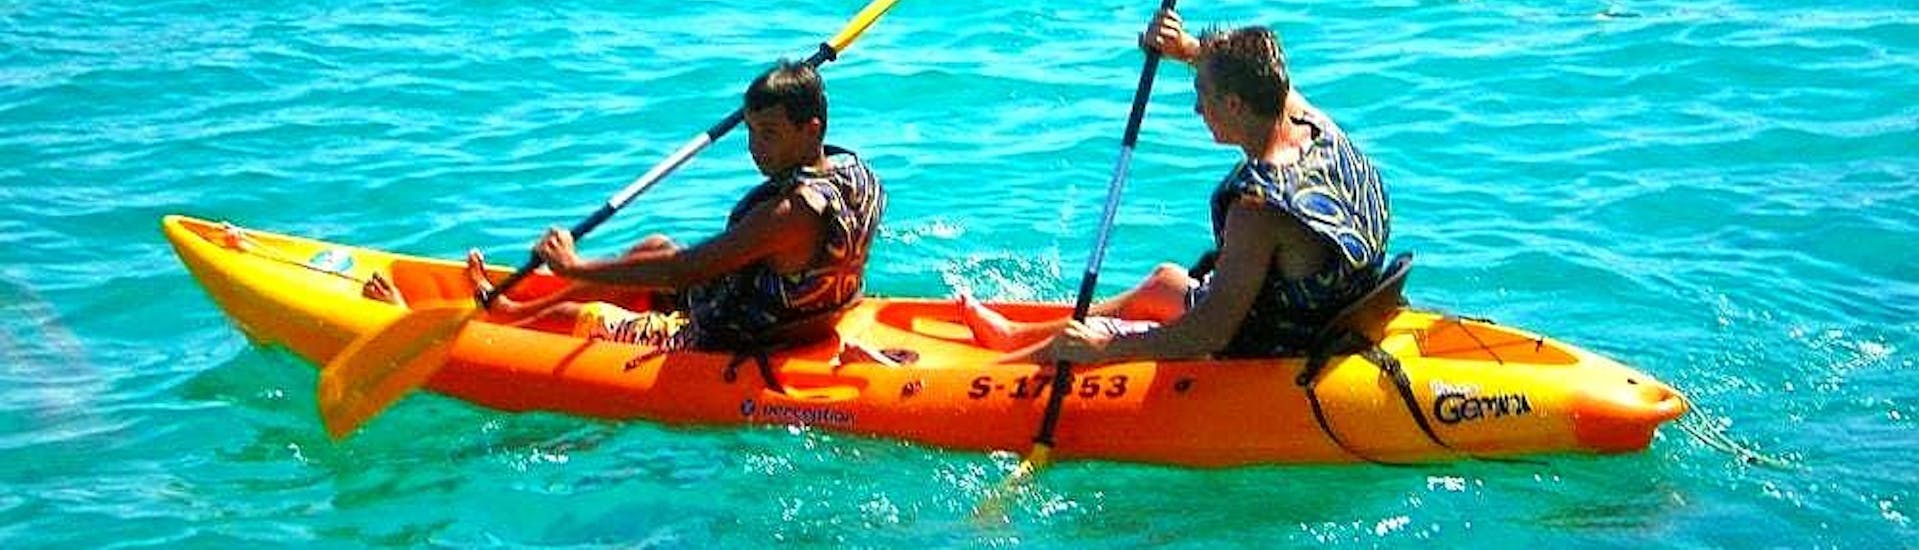 Leichte Kayak & Kanu-Tour in Qala - Blue Lagoon Malta.